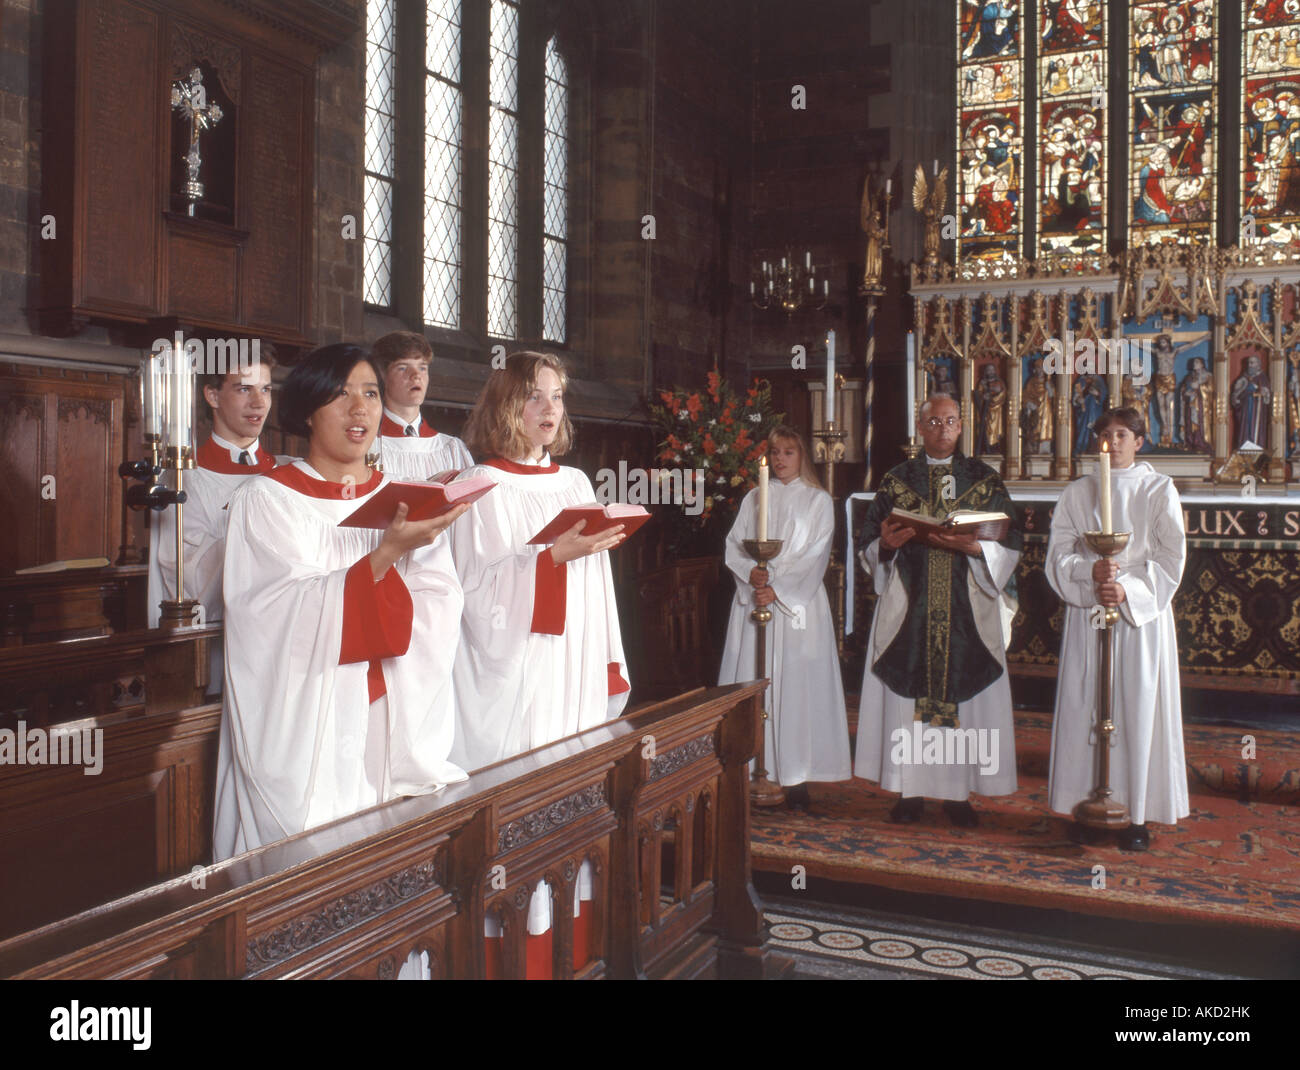 Children's choir singing in church, Surrey, England, United Kingdom Stock Photo